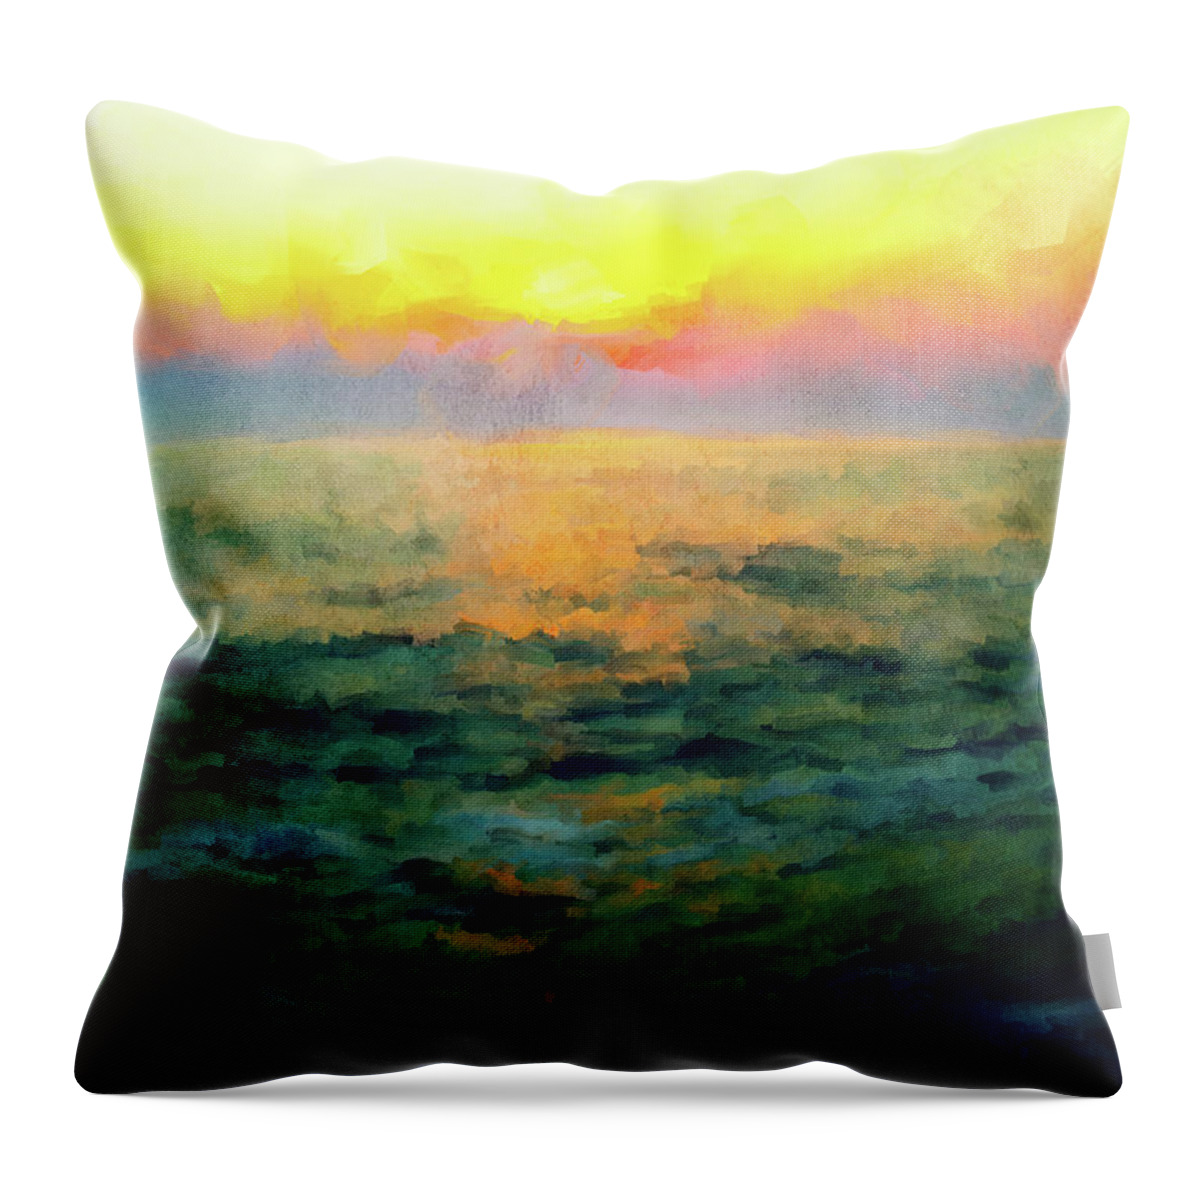 Ocean Throw Pillow featuring the digital art California Evening by Shawn Conn